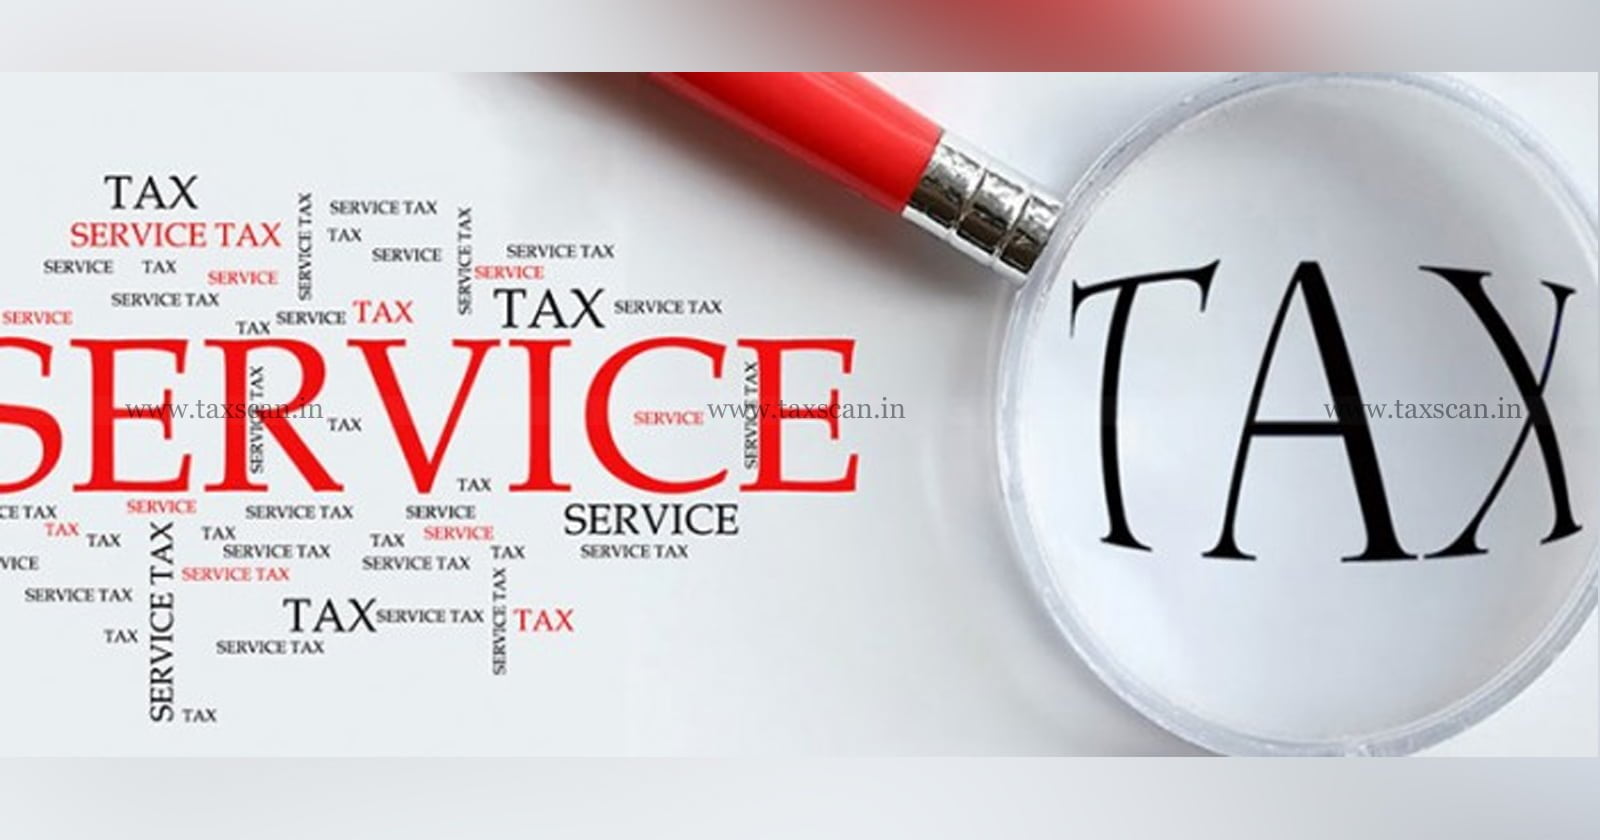 registration - Category - Service - Tax - Returns - service - CESTAT - Service - Tax - demand - TAXSCAN